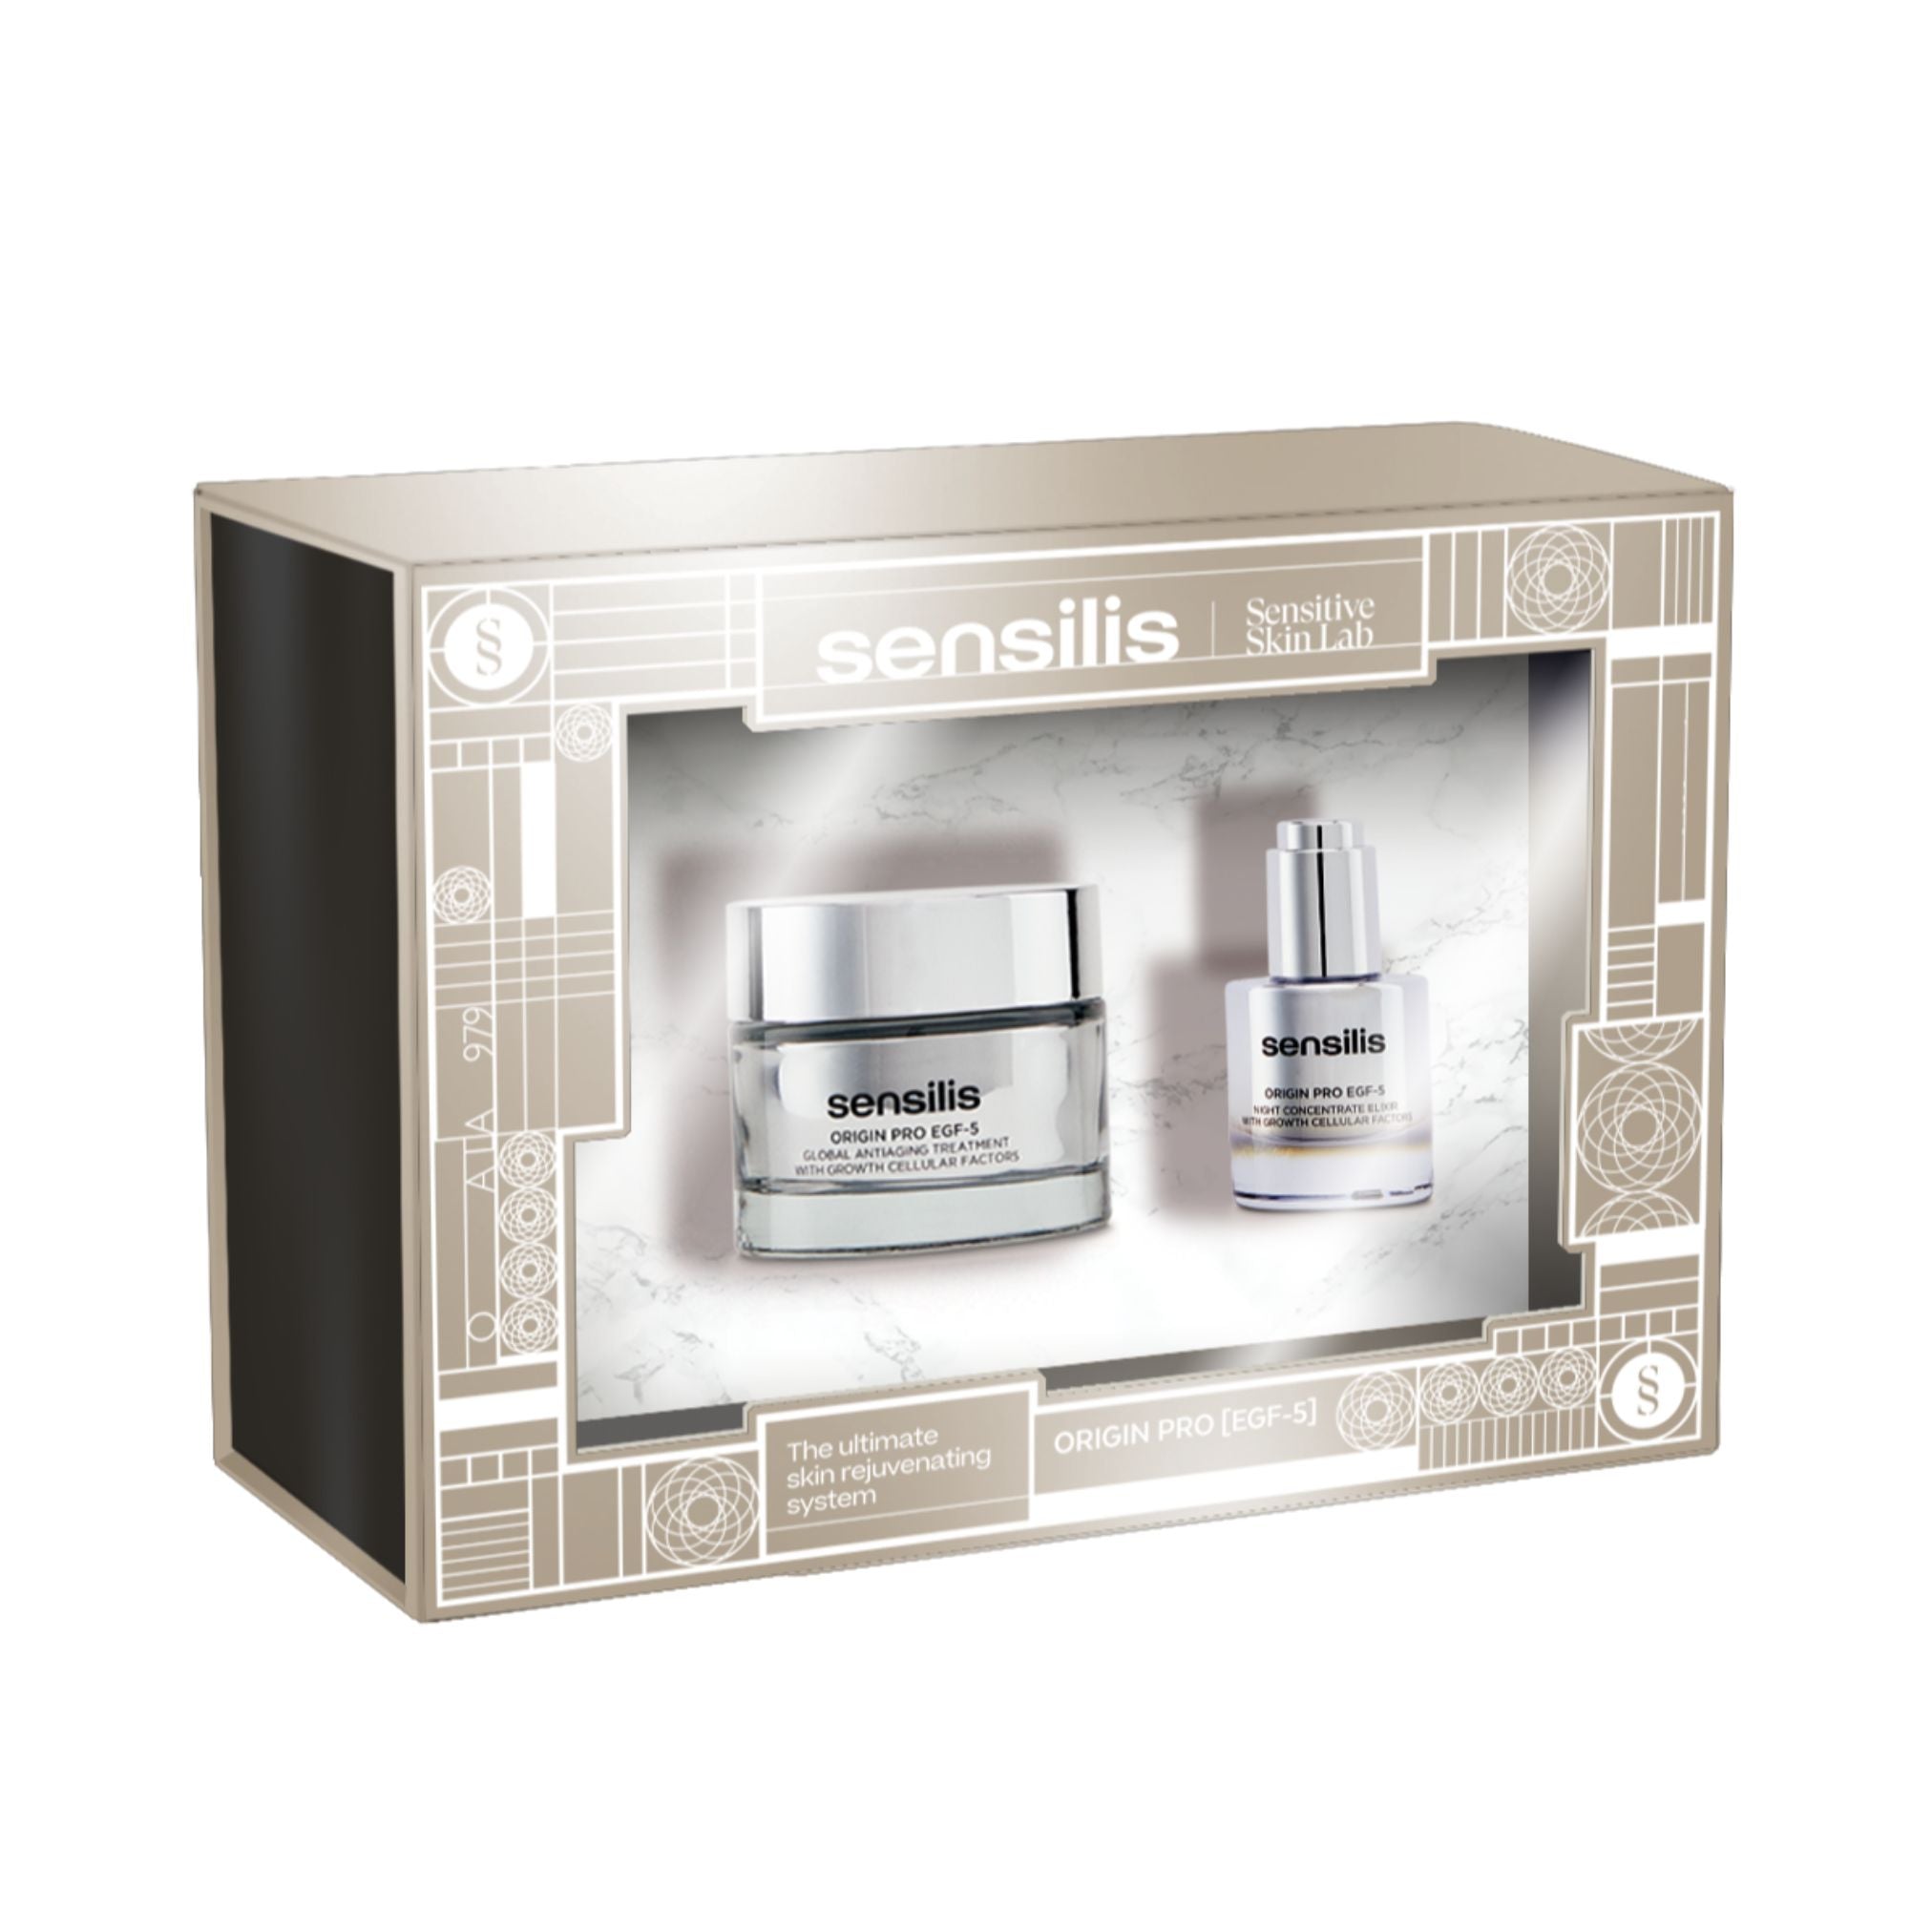 Sensilis Promo Pack: Sensilis Origin Pro EGF-5 [Cream] 50ml + Sensilis Origin Pro EGF-5 [Night Elixir] 20ml